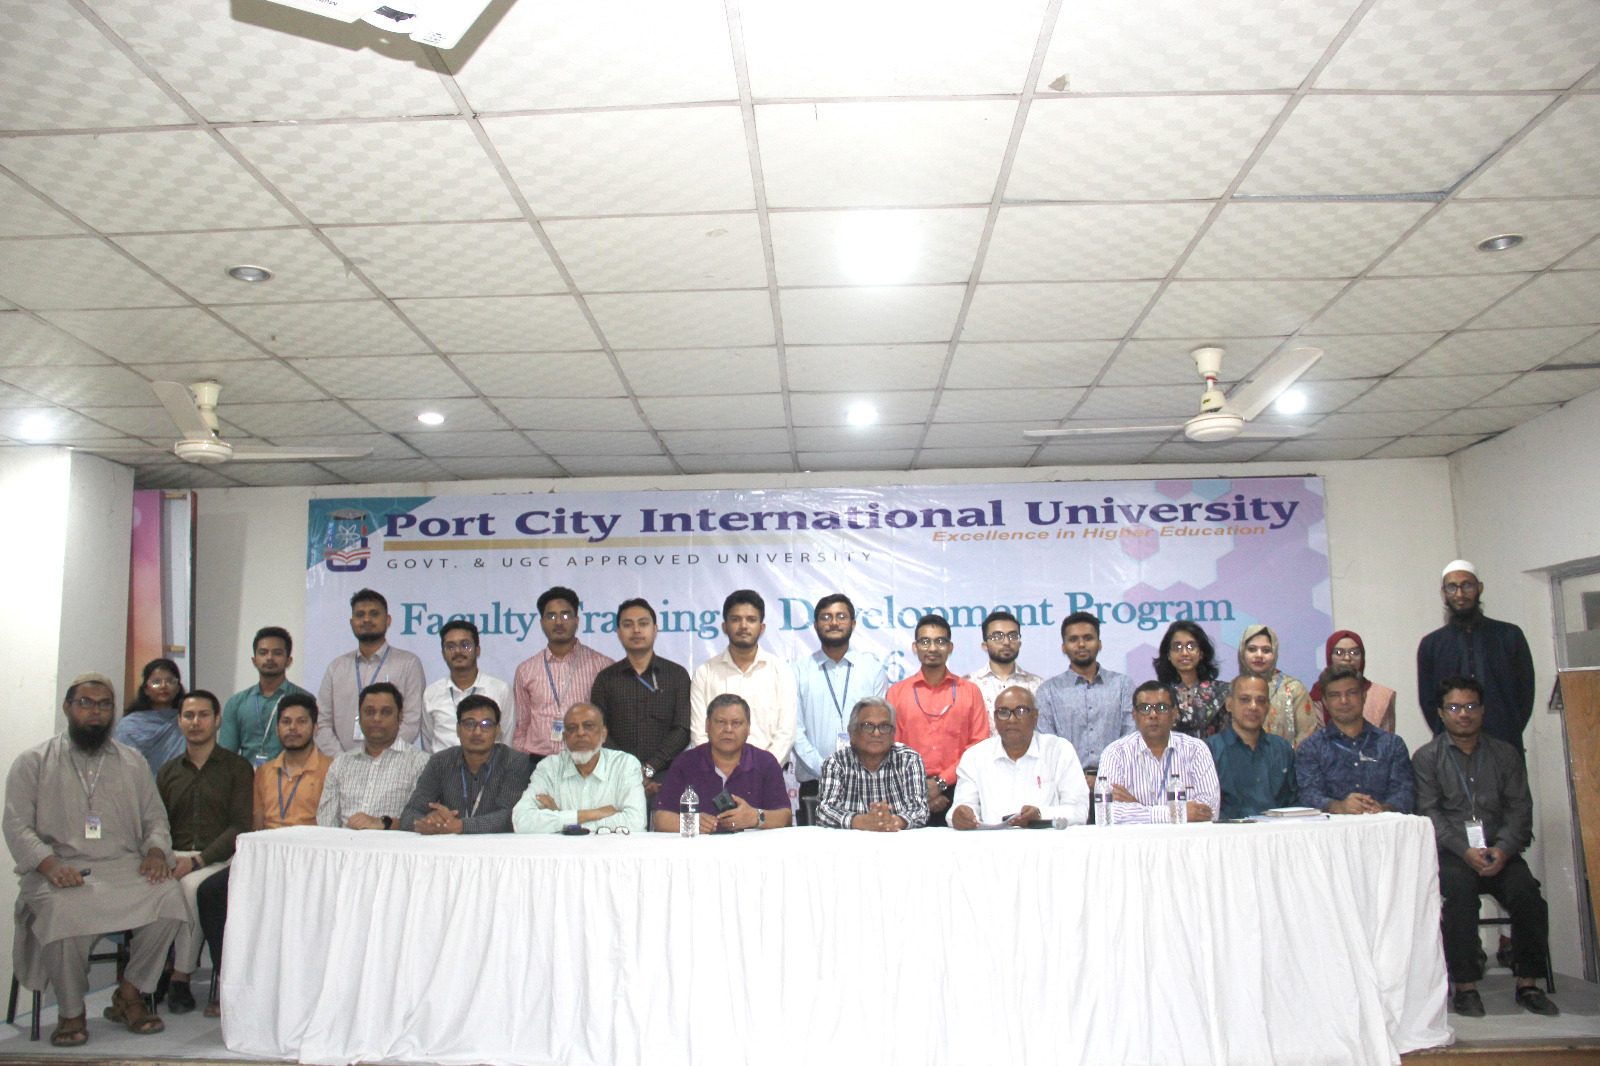 Port City International University